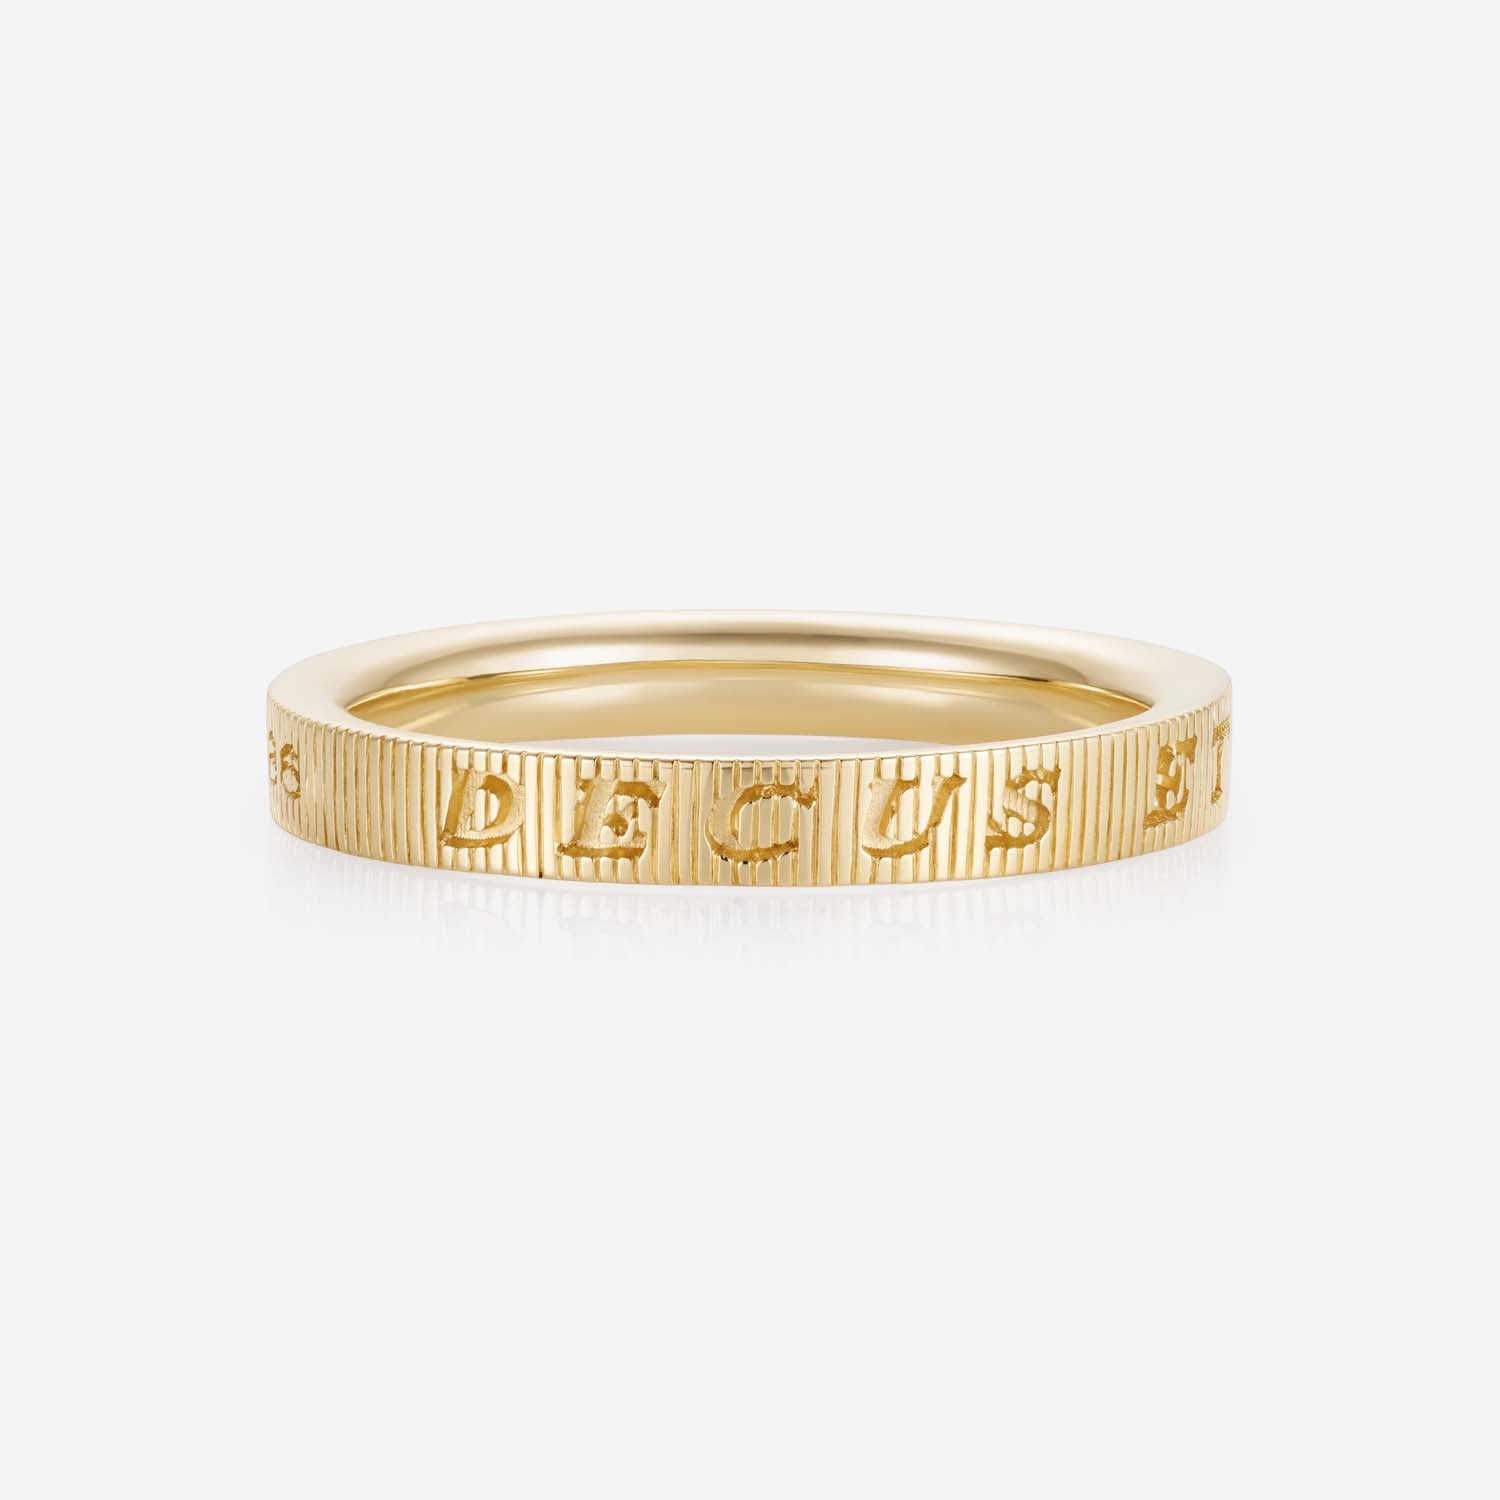 886 Royal Mint Rings Tutamen Small Ring 18ct Yellow Gold